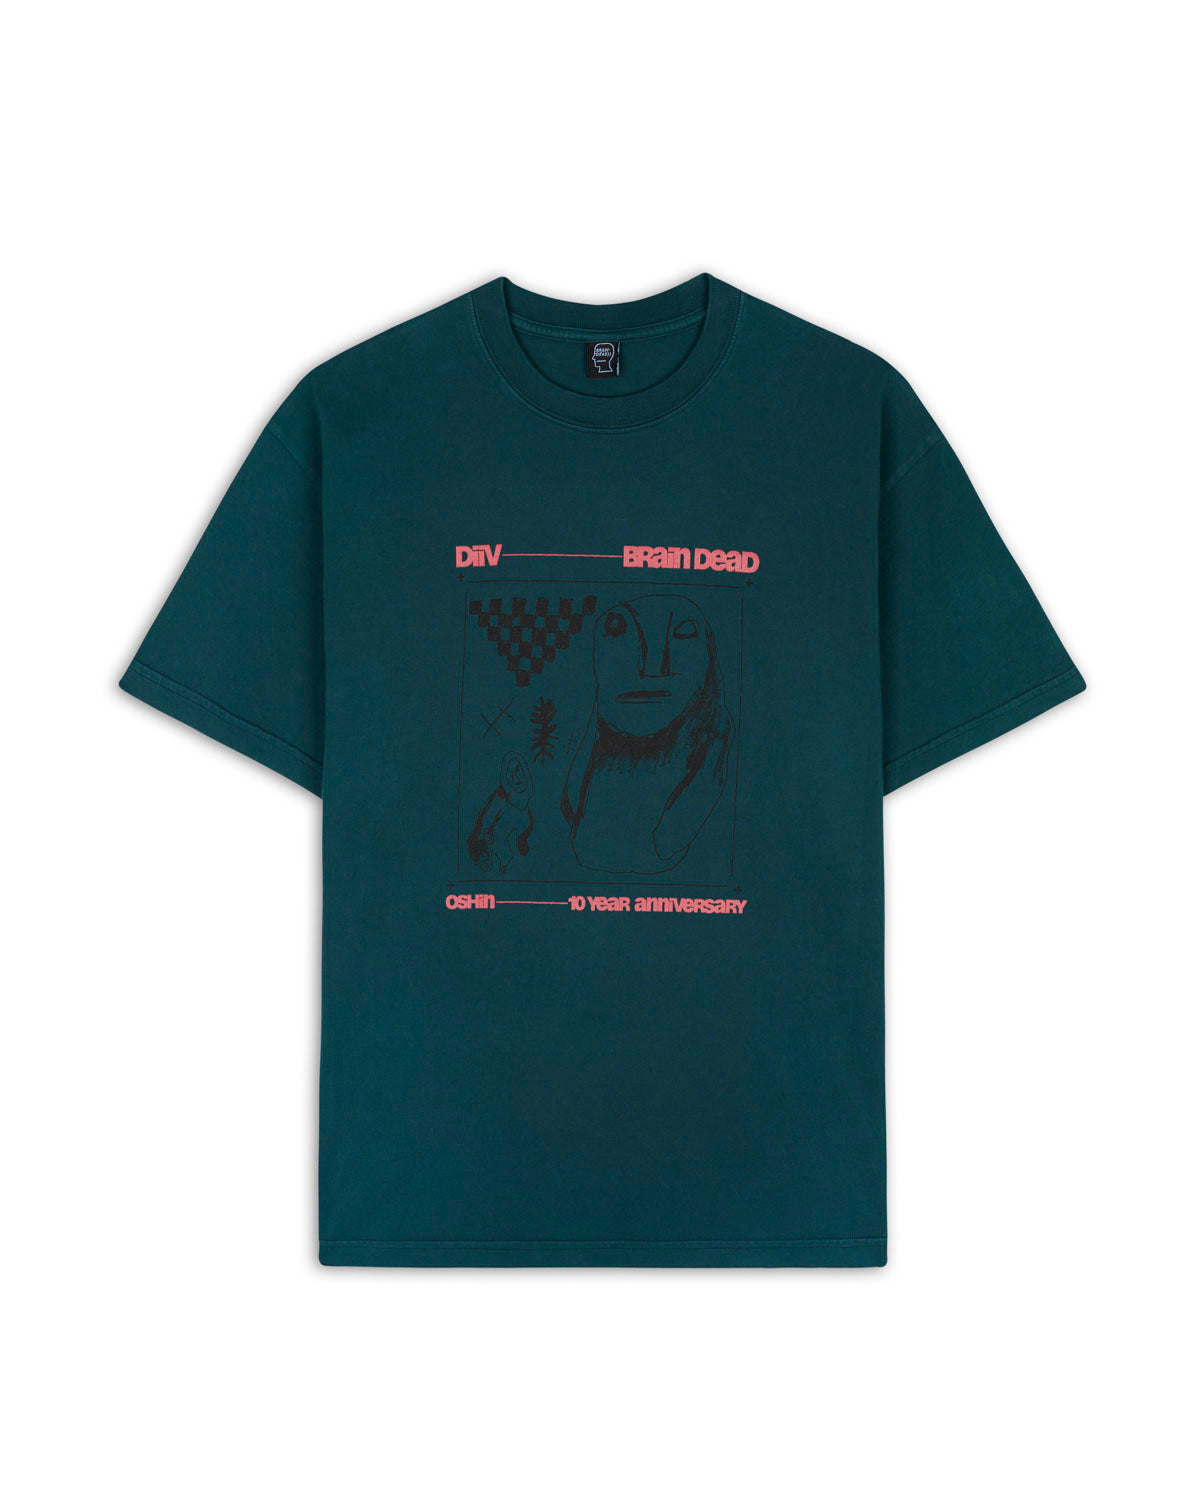 Brain Dead x DIIV "The Oshin" Ten Year Anniversary T-Shirt - Teal 1